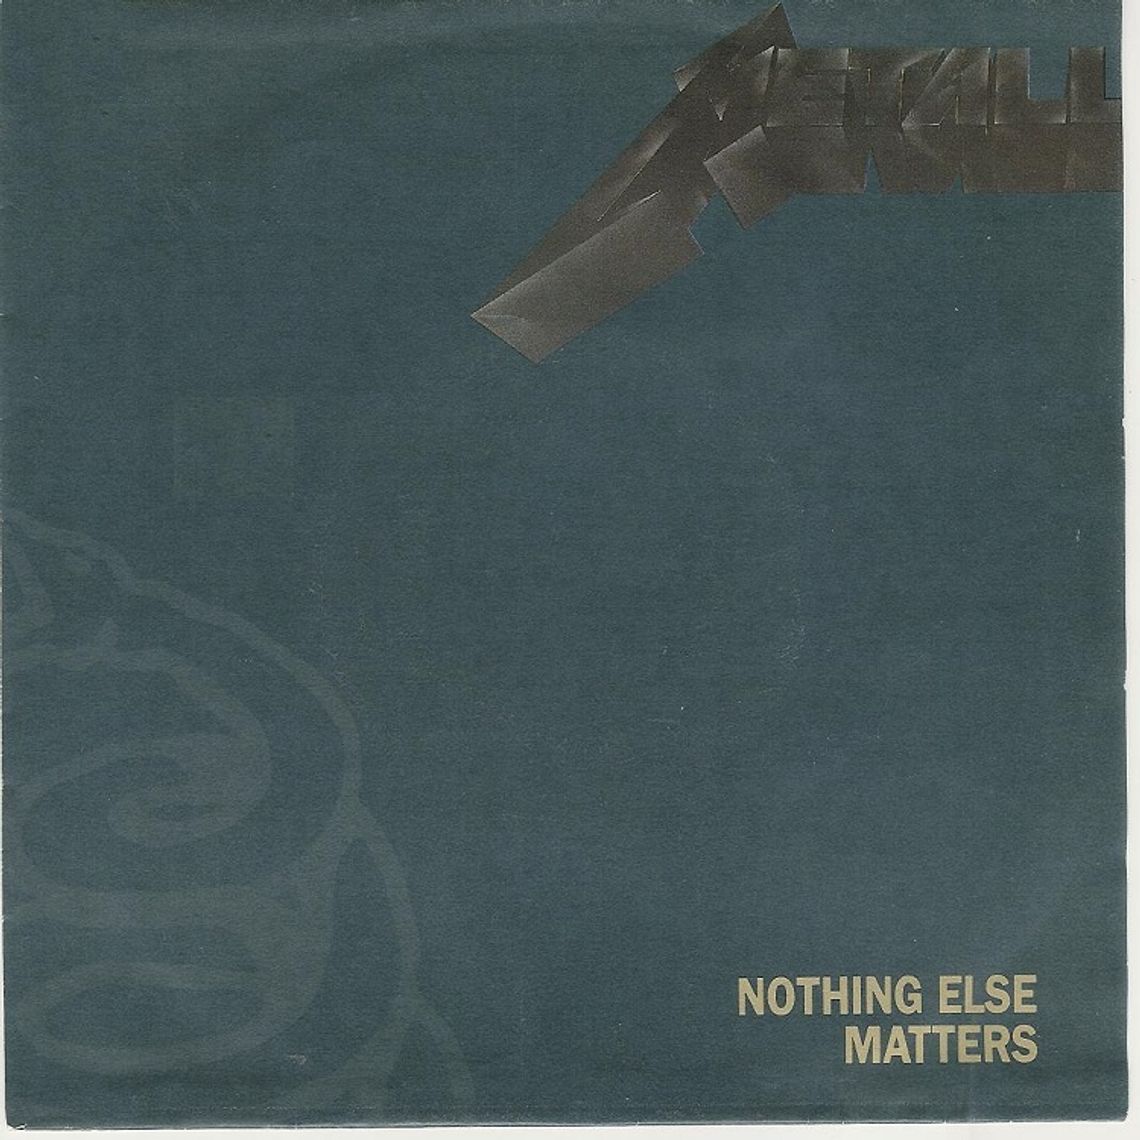 METALLICA "Nothing else matters"